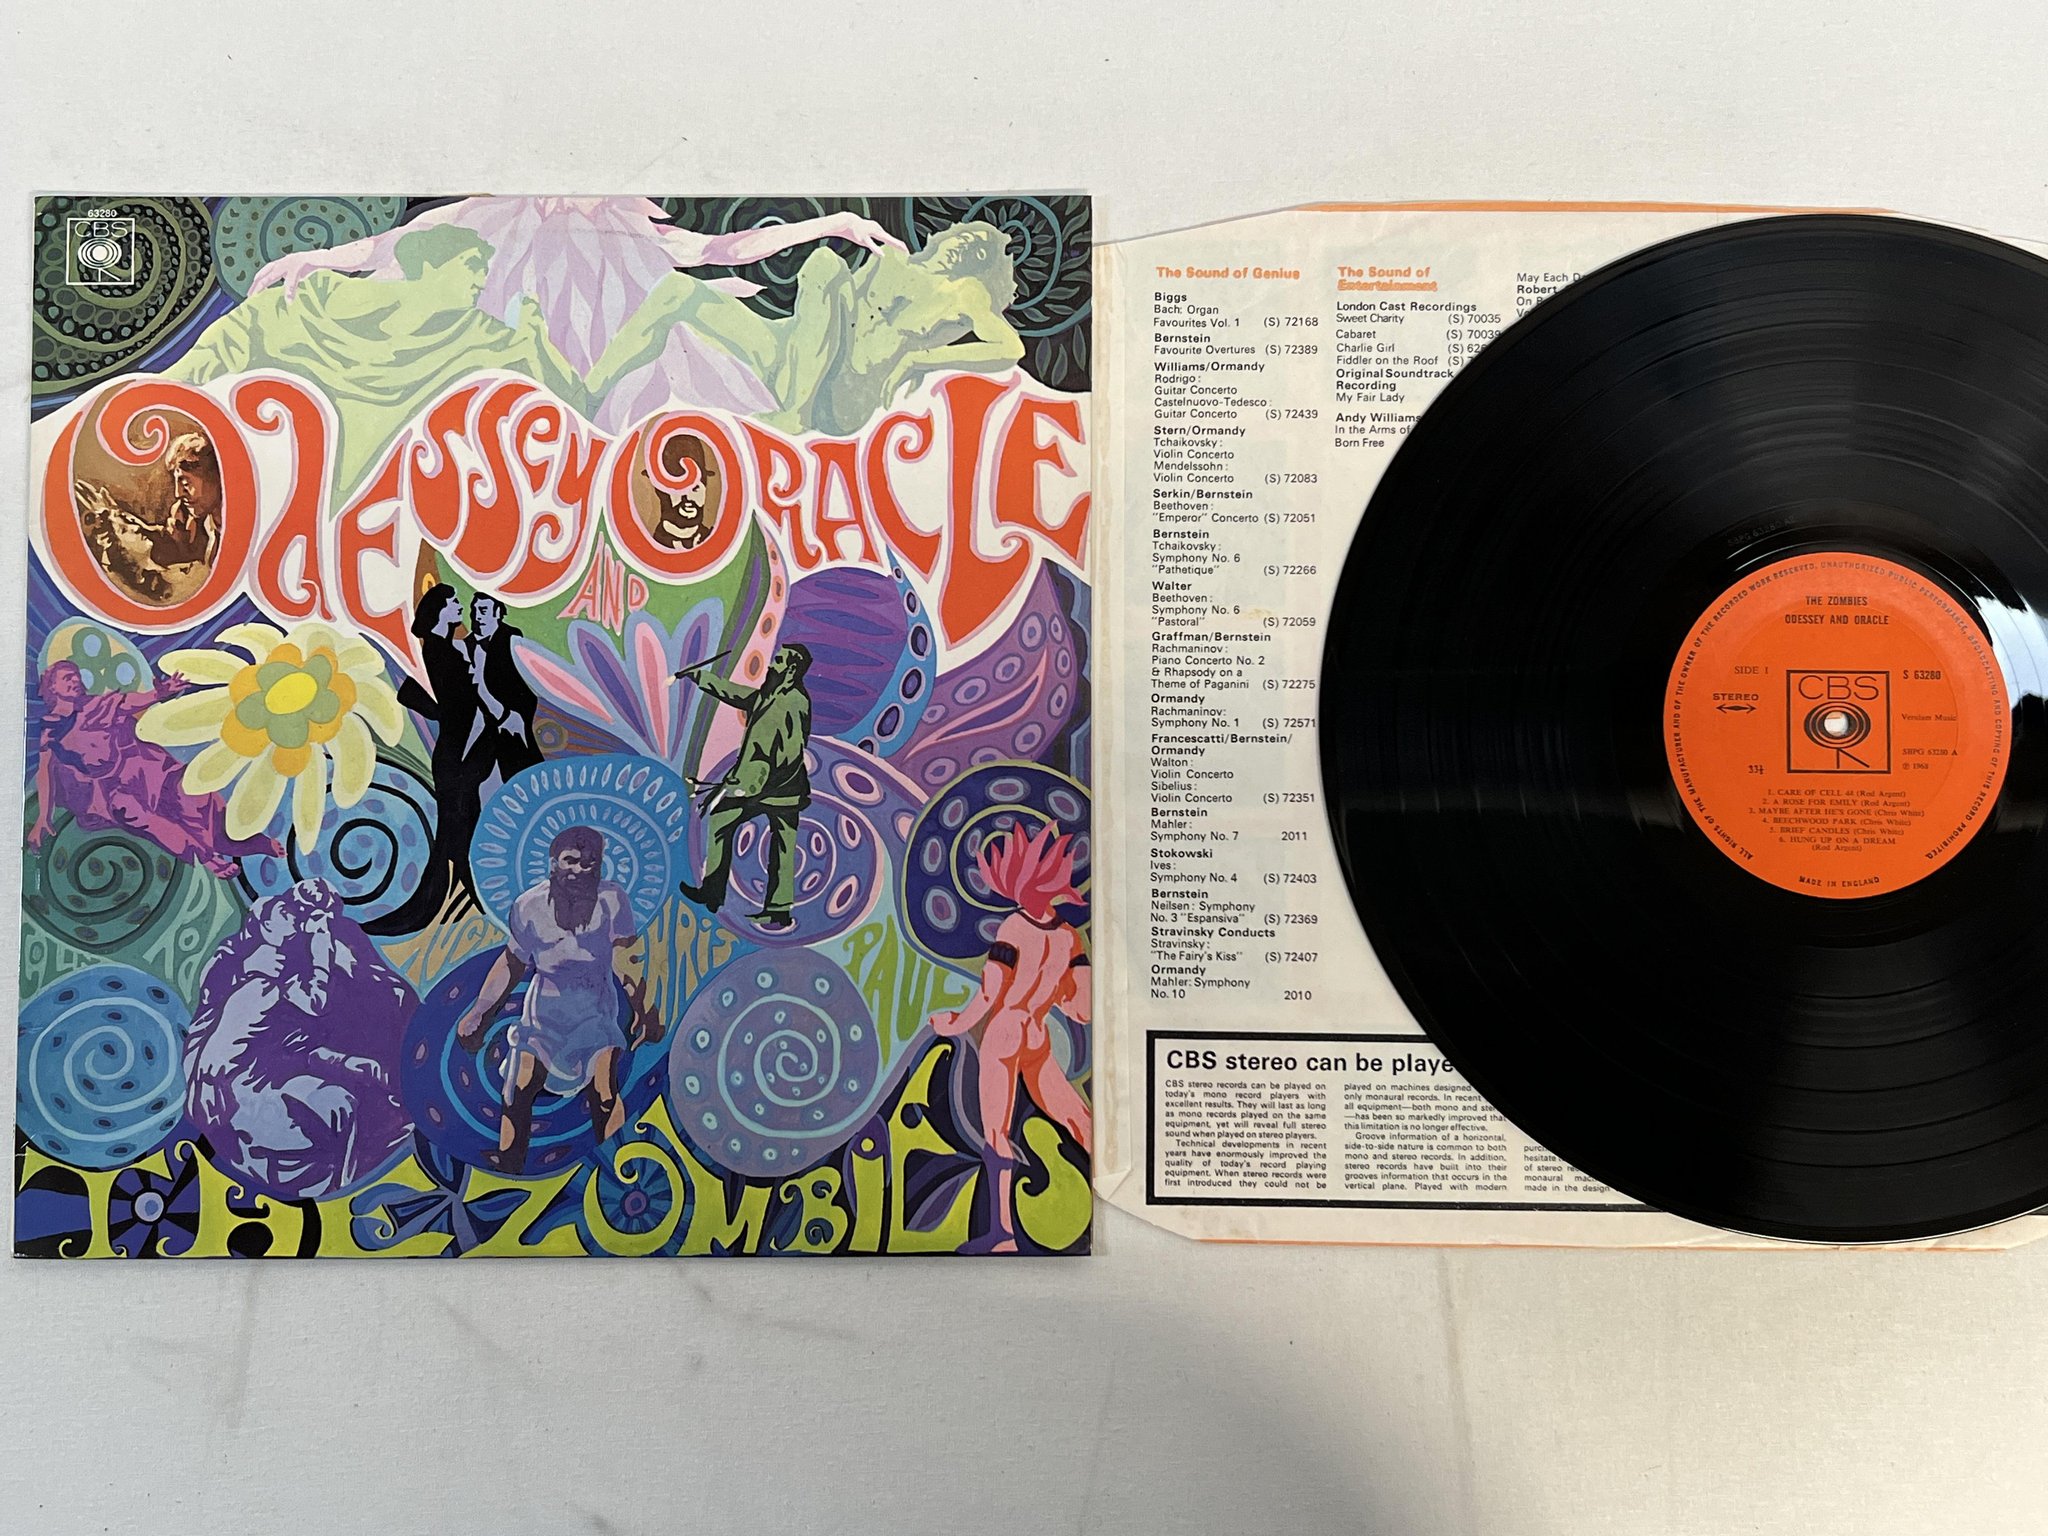 Omslagsbild för skivan THE ZOMBIES odessey and oracle LP -68 UK CBS S 63280 ** RARE PSYCH ROCK **